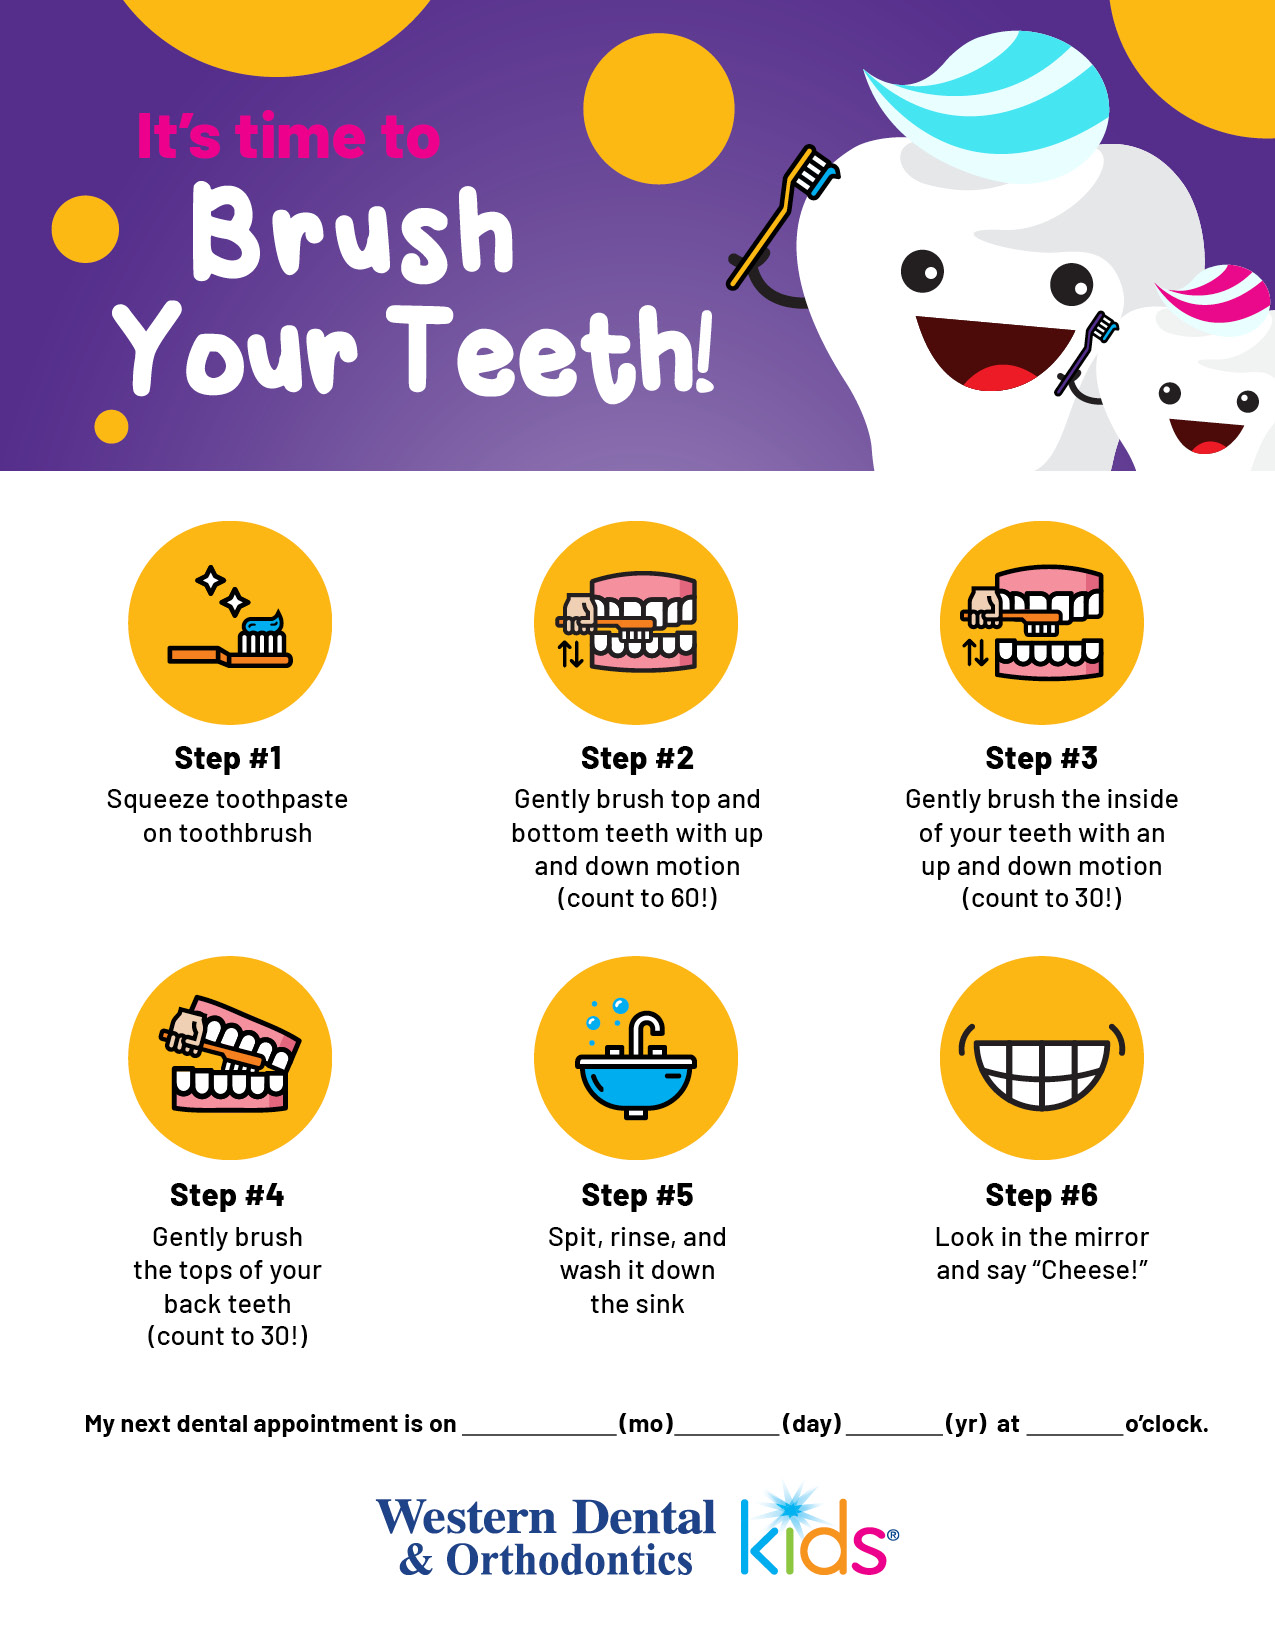 Western Dental Kids - February 2021 Brushing Calendar